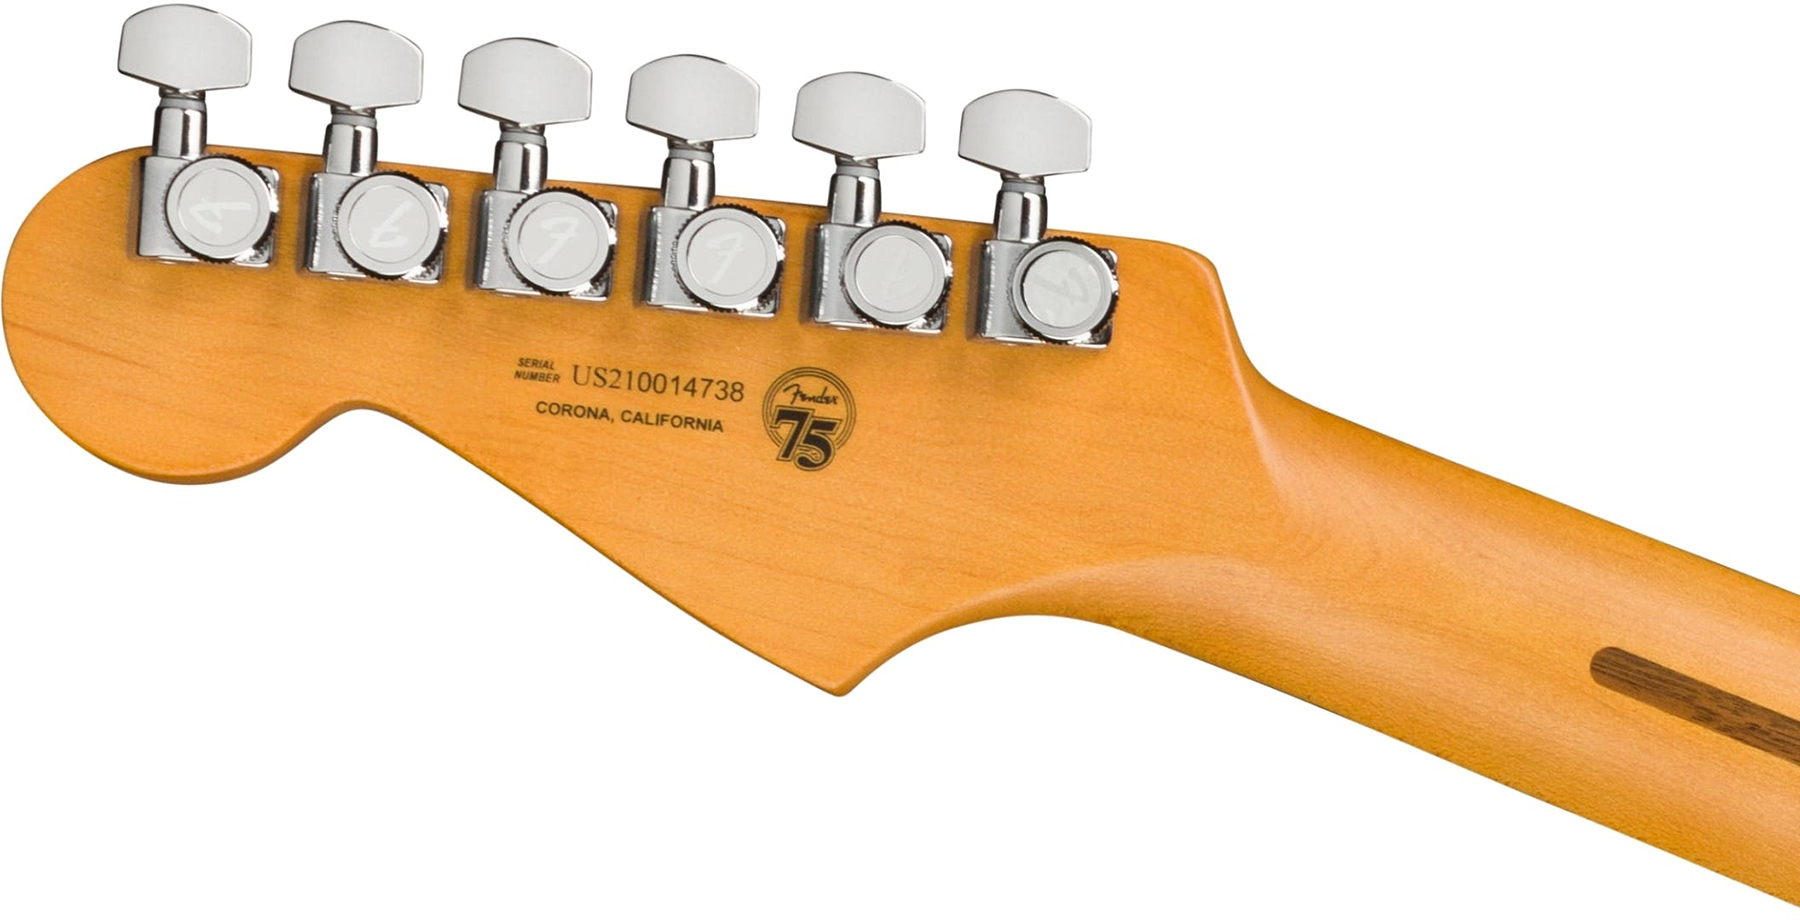 Fender Strat American Ultra Ltd Usa 3s Trem Eb - Quicksilver - Guitarra eléctrica con forma de str. - Variation 3